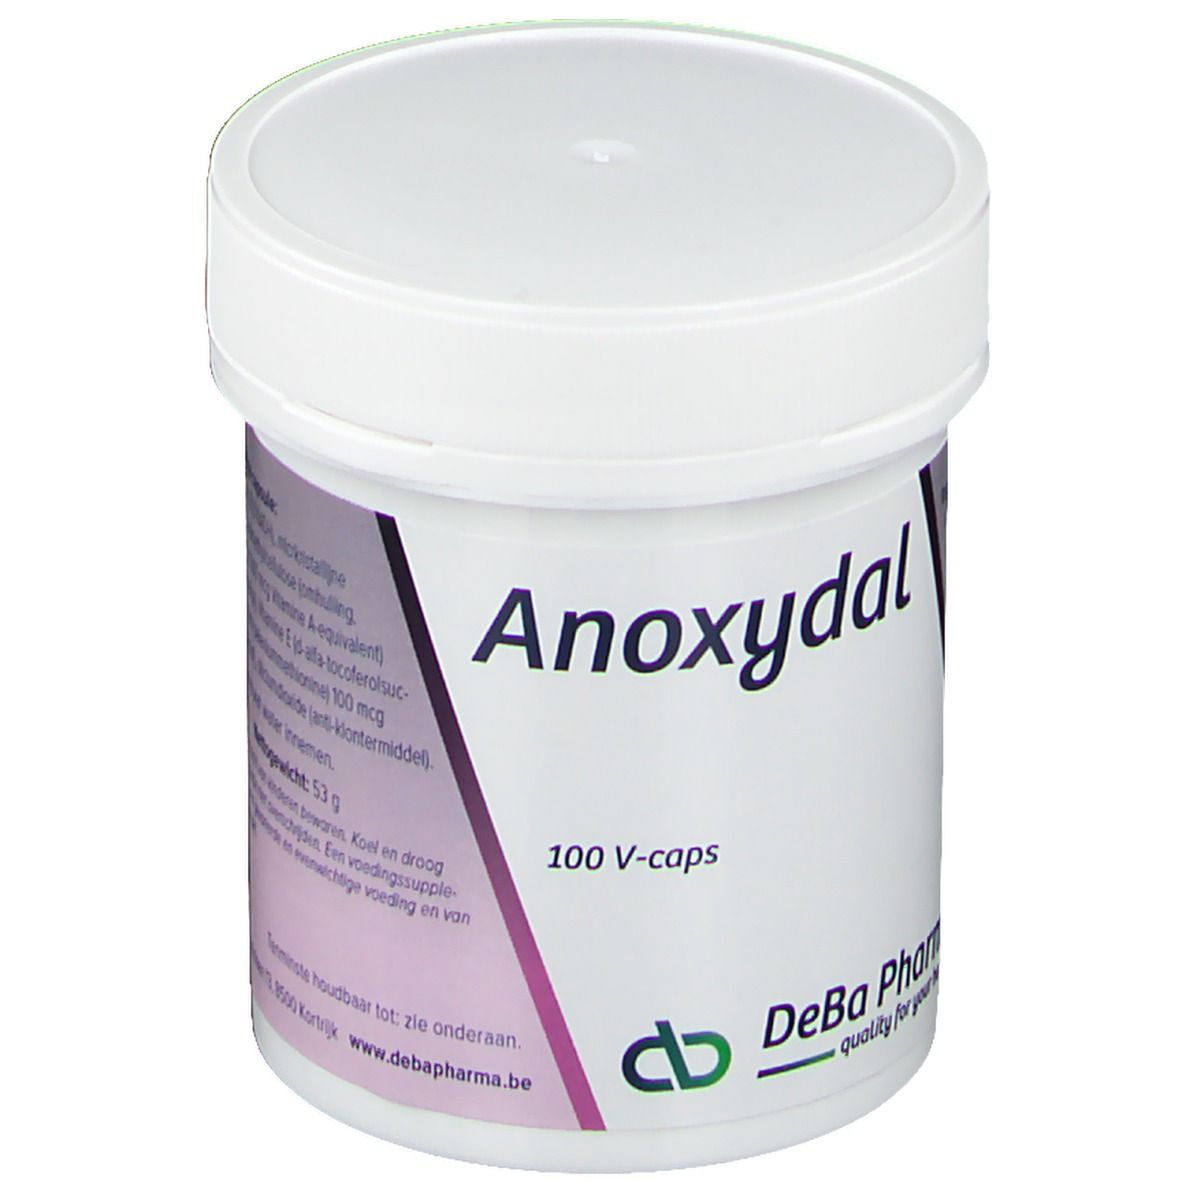 DeBa Pharma Anoxydal